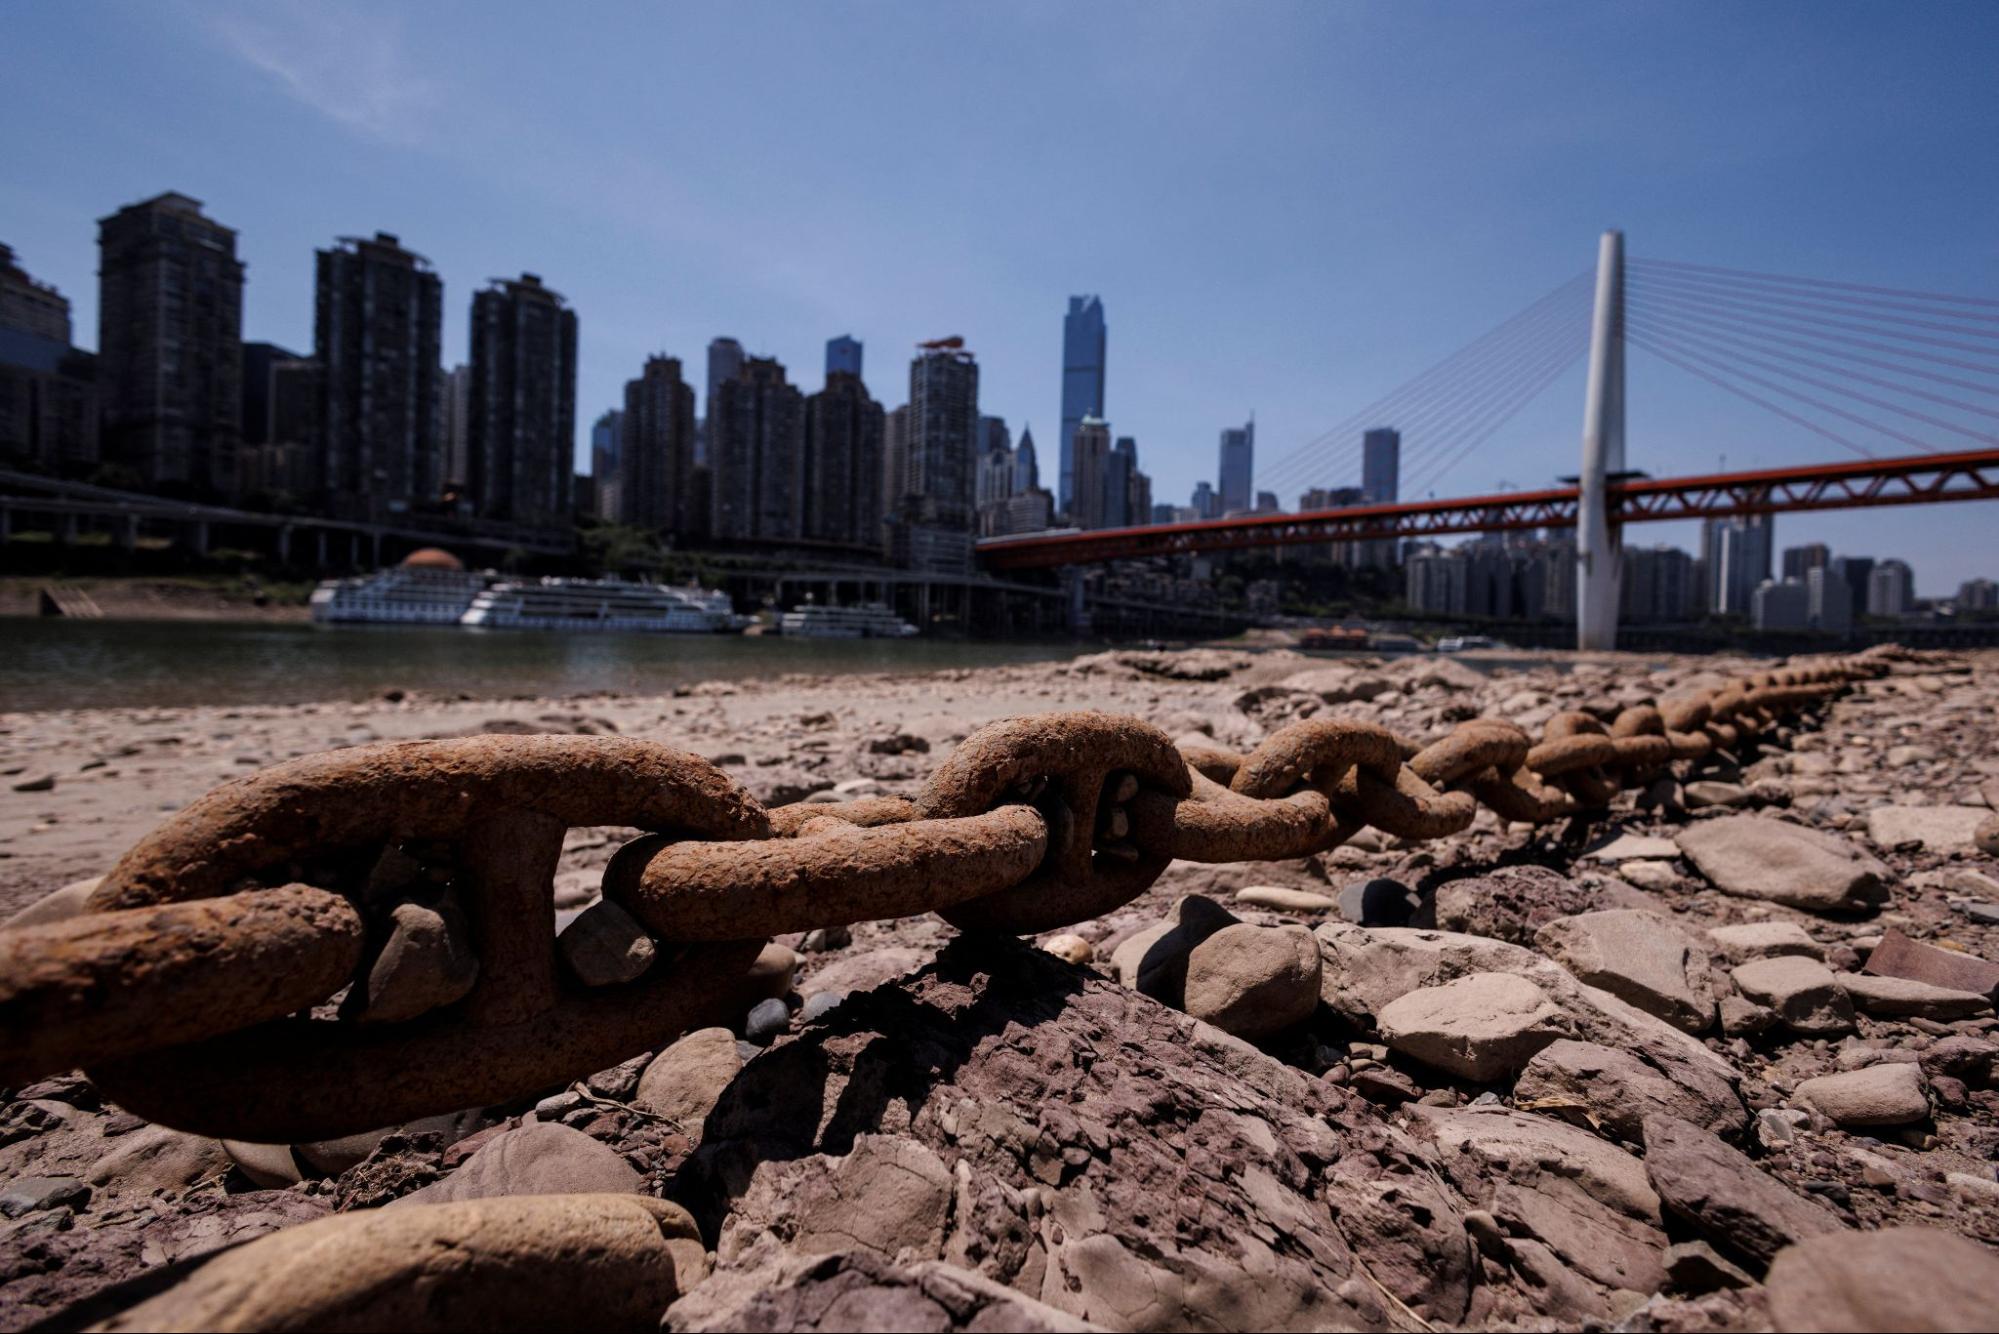 Янцзы обмелела. Река Янцзы высыхает. Янцзы сейчассейчас засуха. Засуха в Китае 2022.